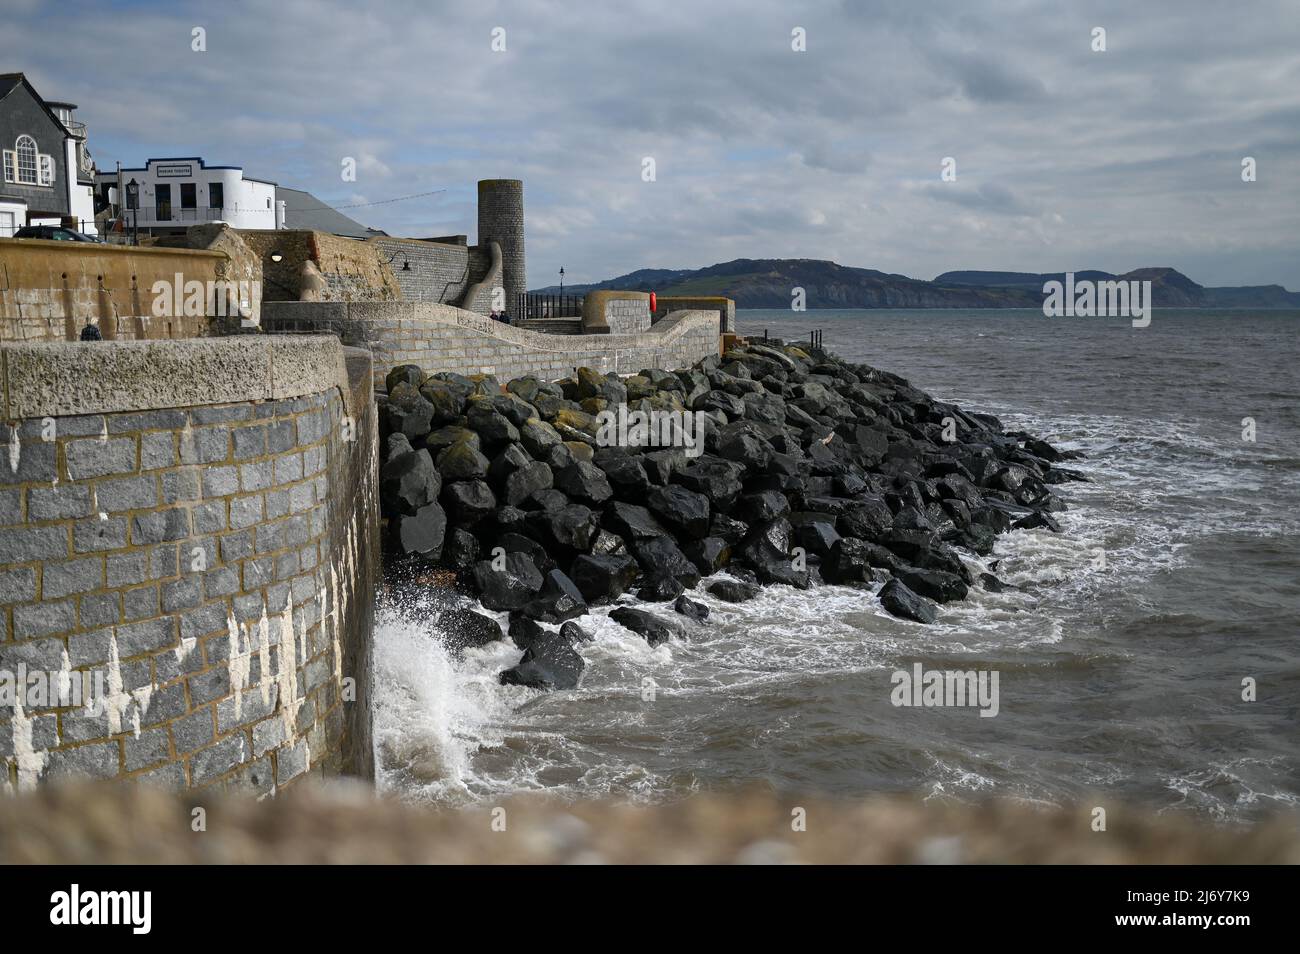 Lyme Regis sea defence rocks to protect shore line Stock Photo